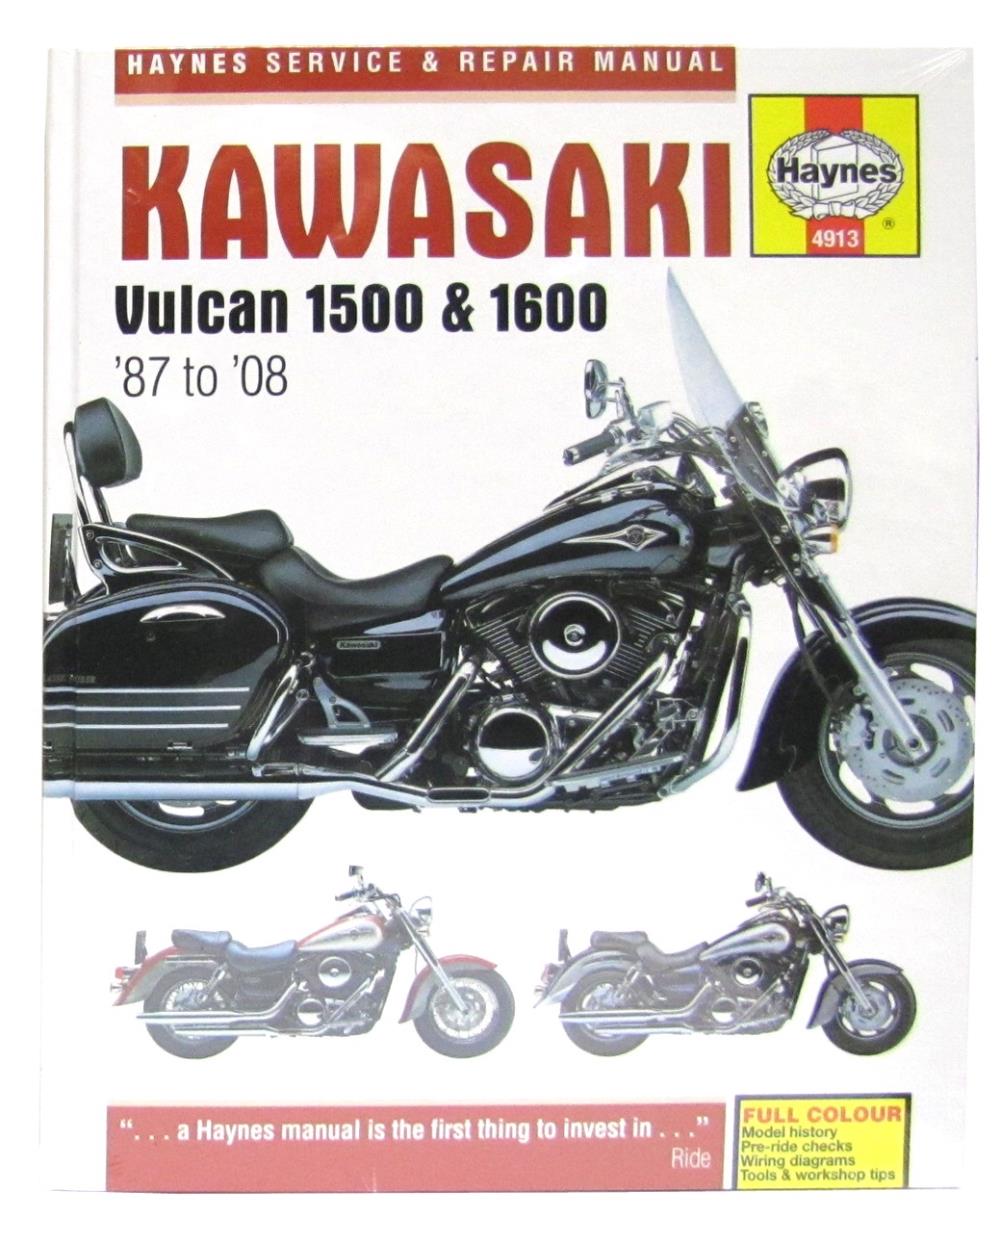 Мануалы и документация для Kawasaki VN2000 Vulcan